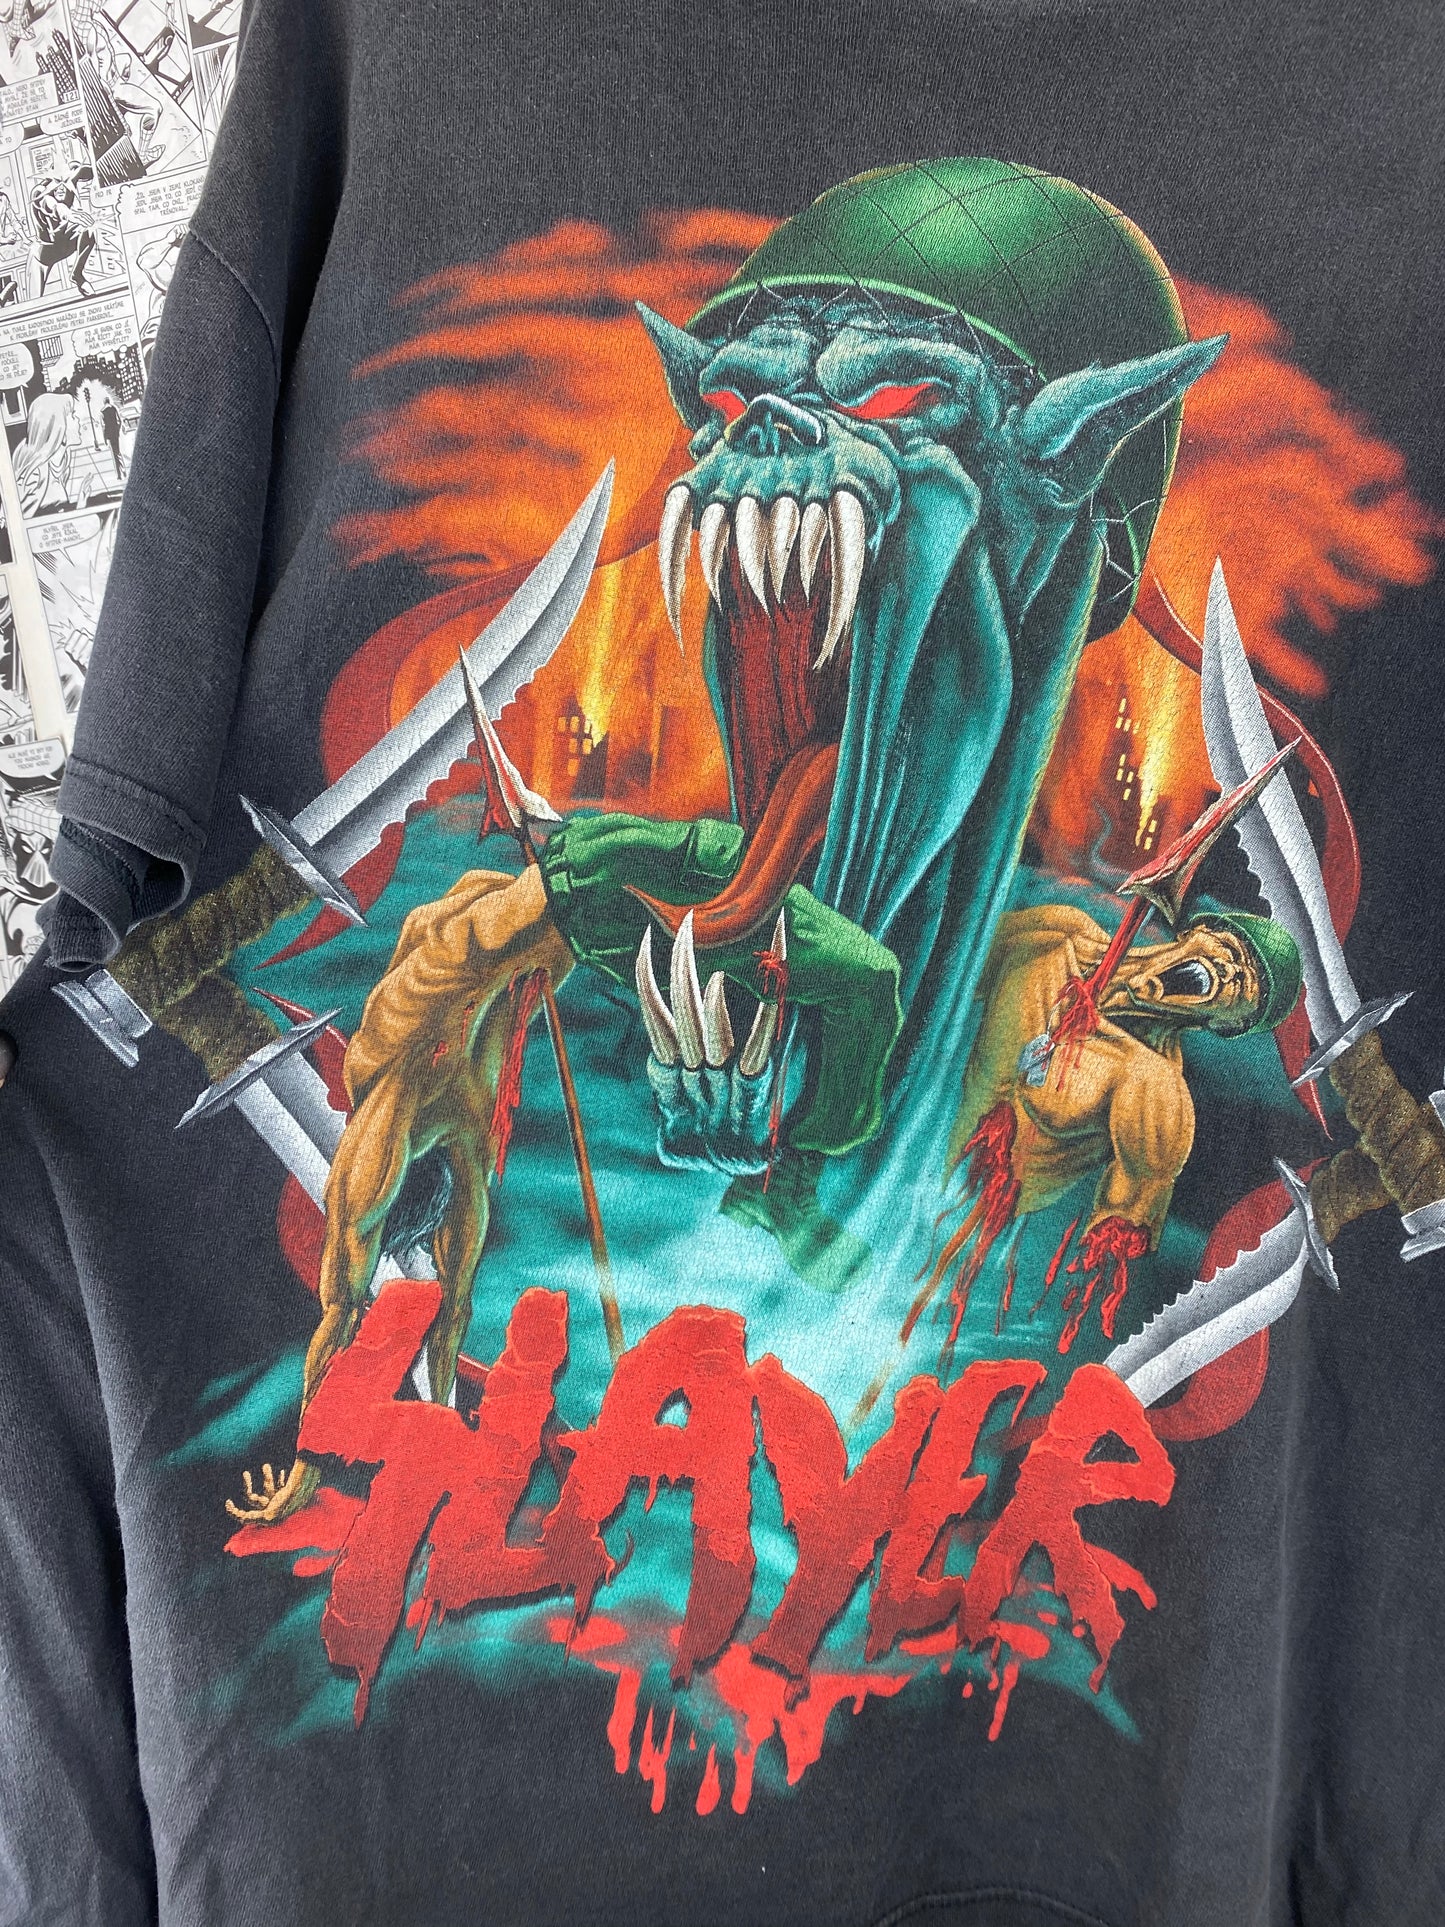 Vintage Slayer “No Blood No Glory” 90s t-shirt